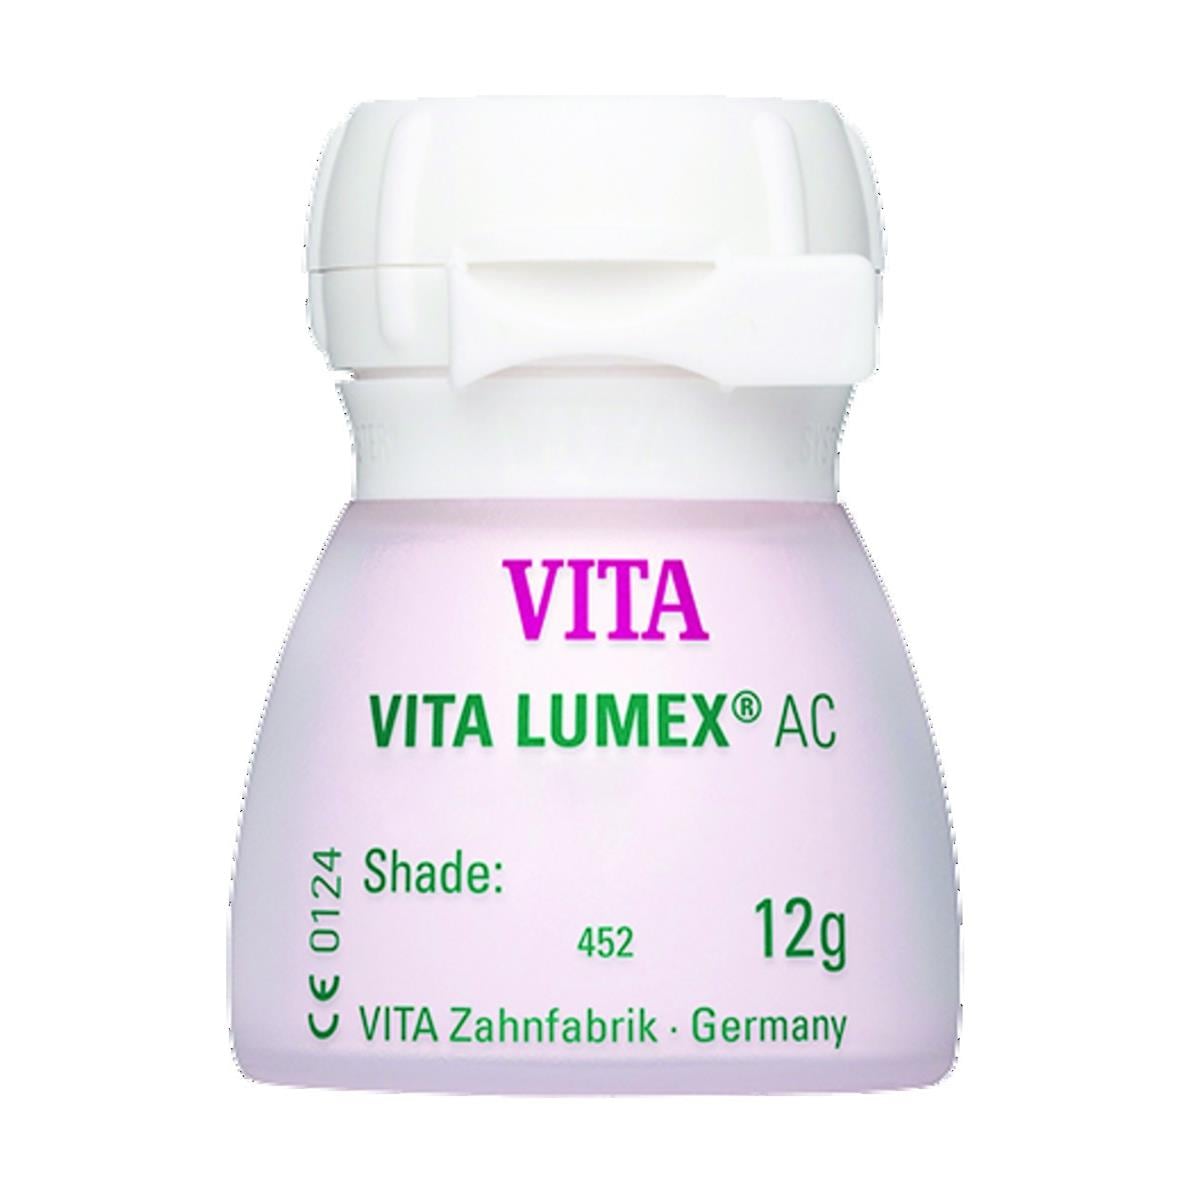 Lumex AC corrective 12g Desert VITA